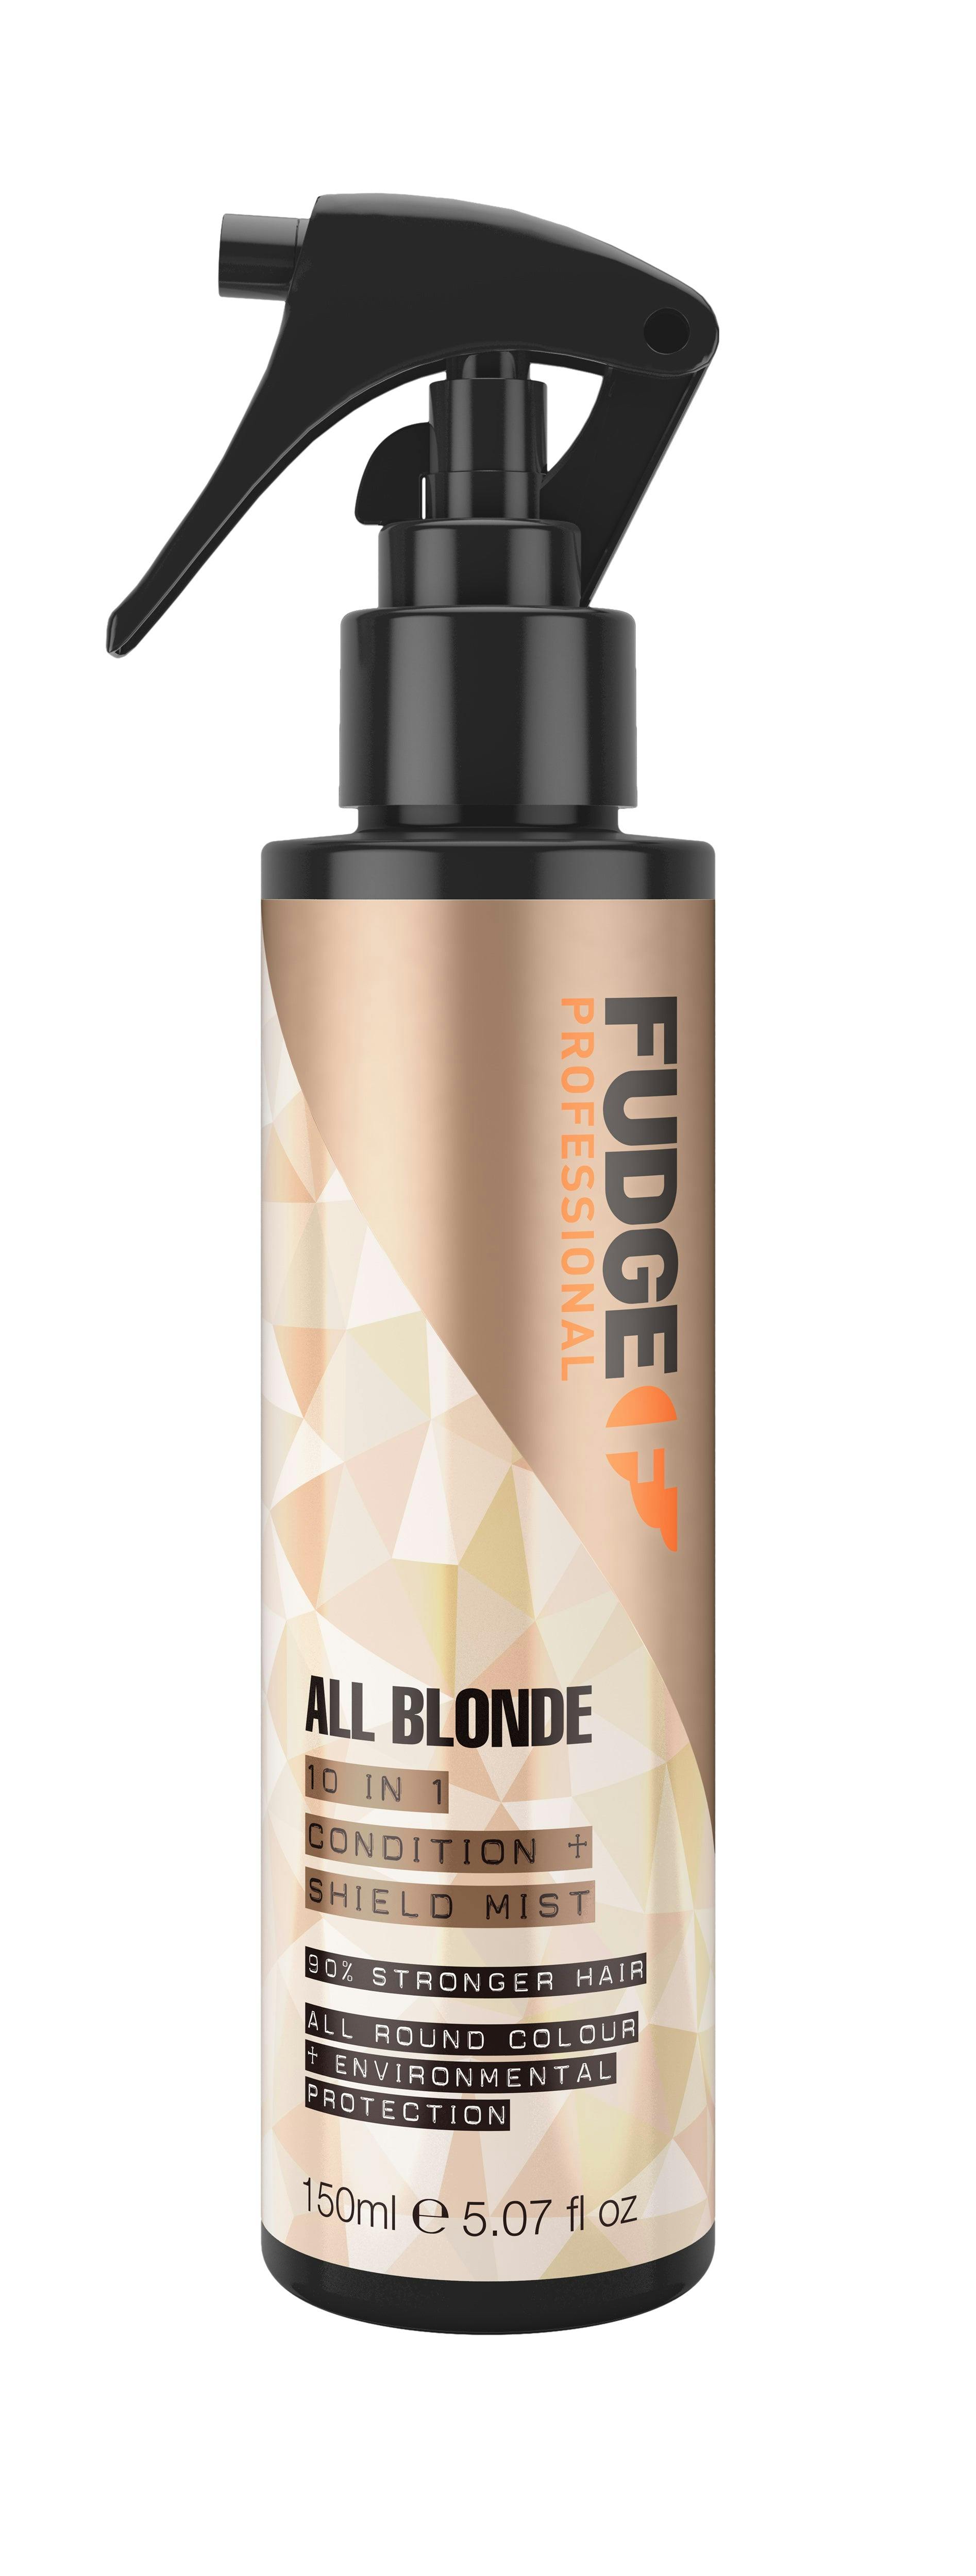 Fudge All Blonde 10-in-1 Condition & Shield Mist 150ml